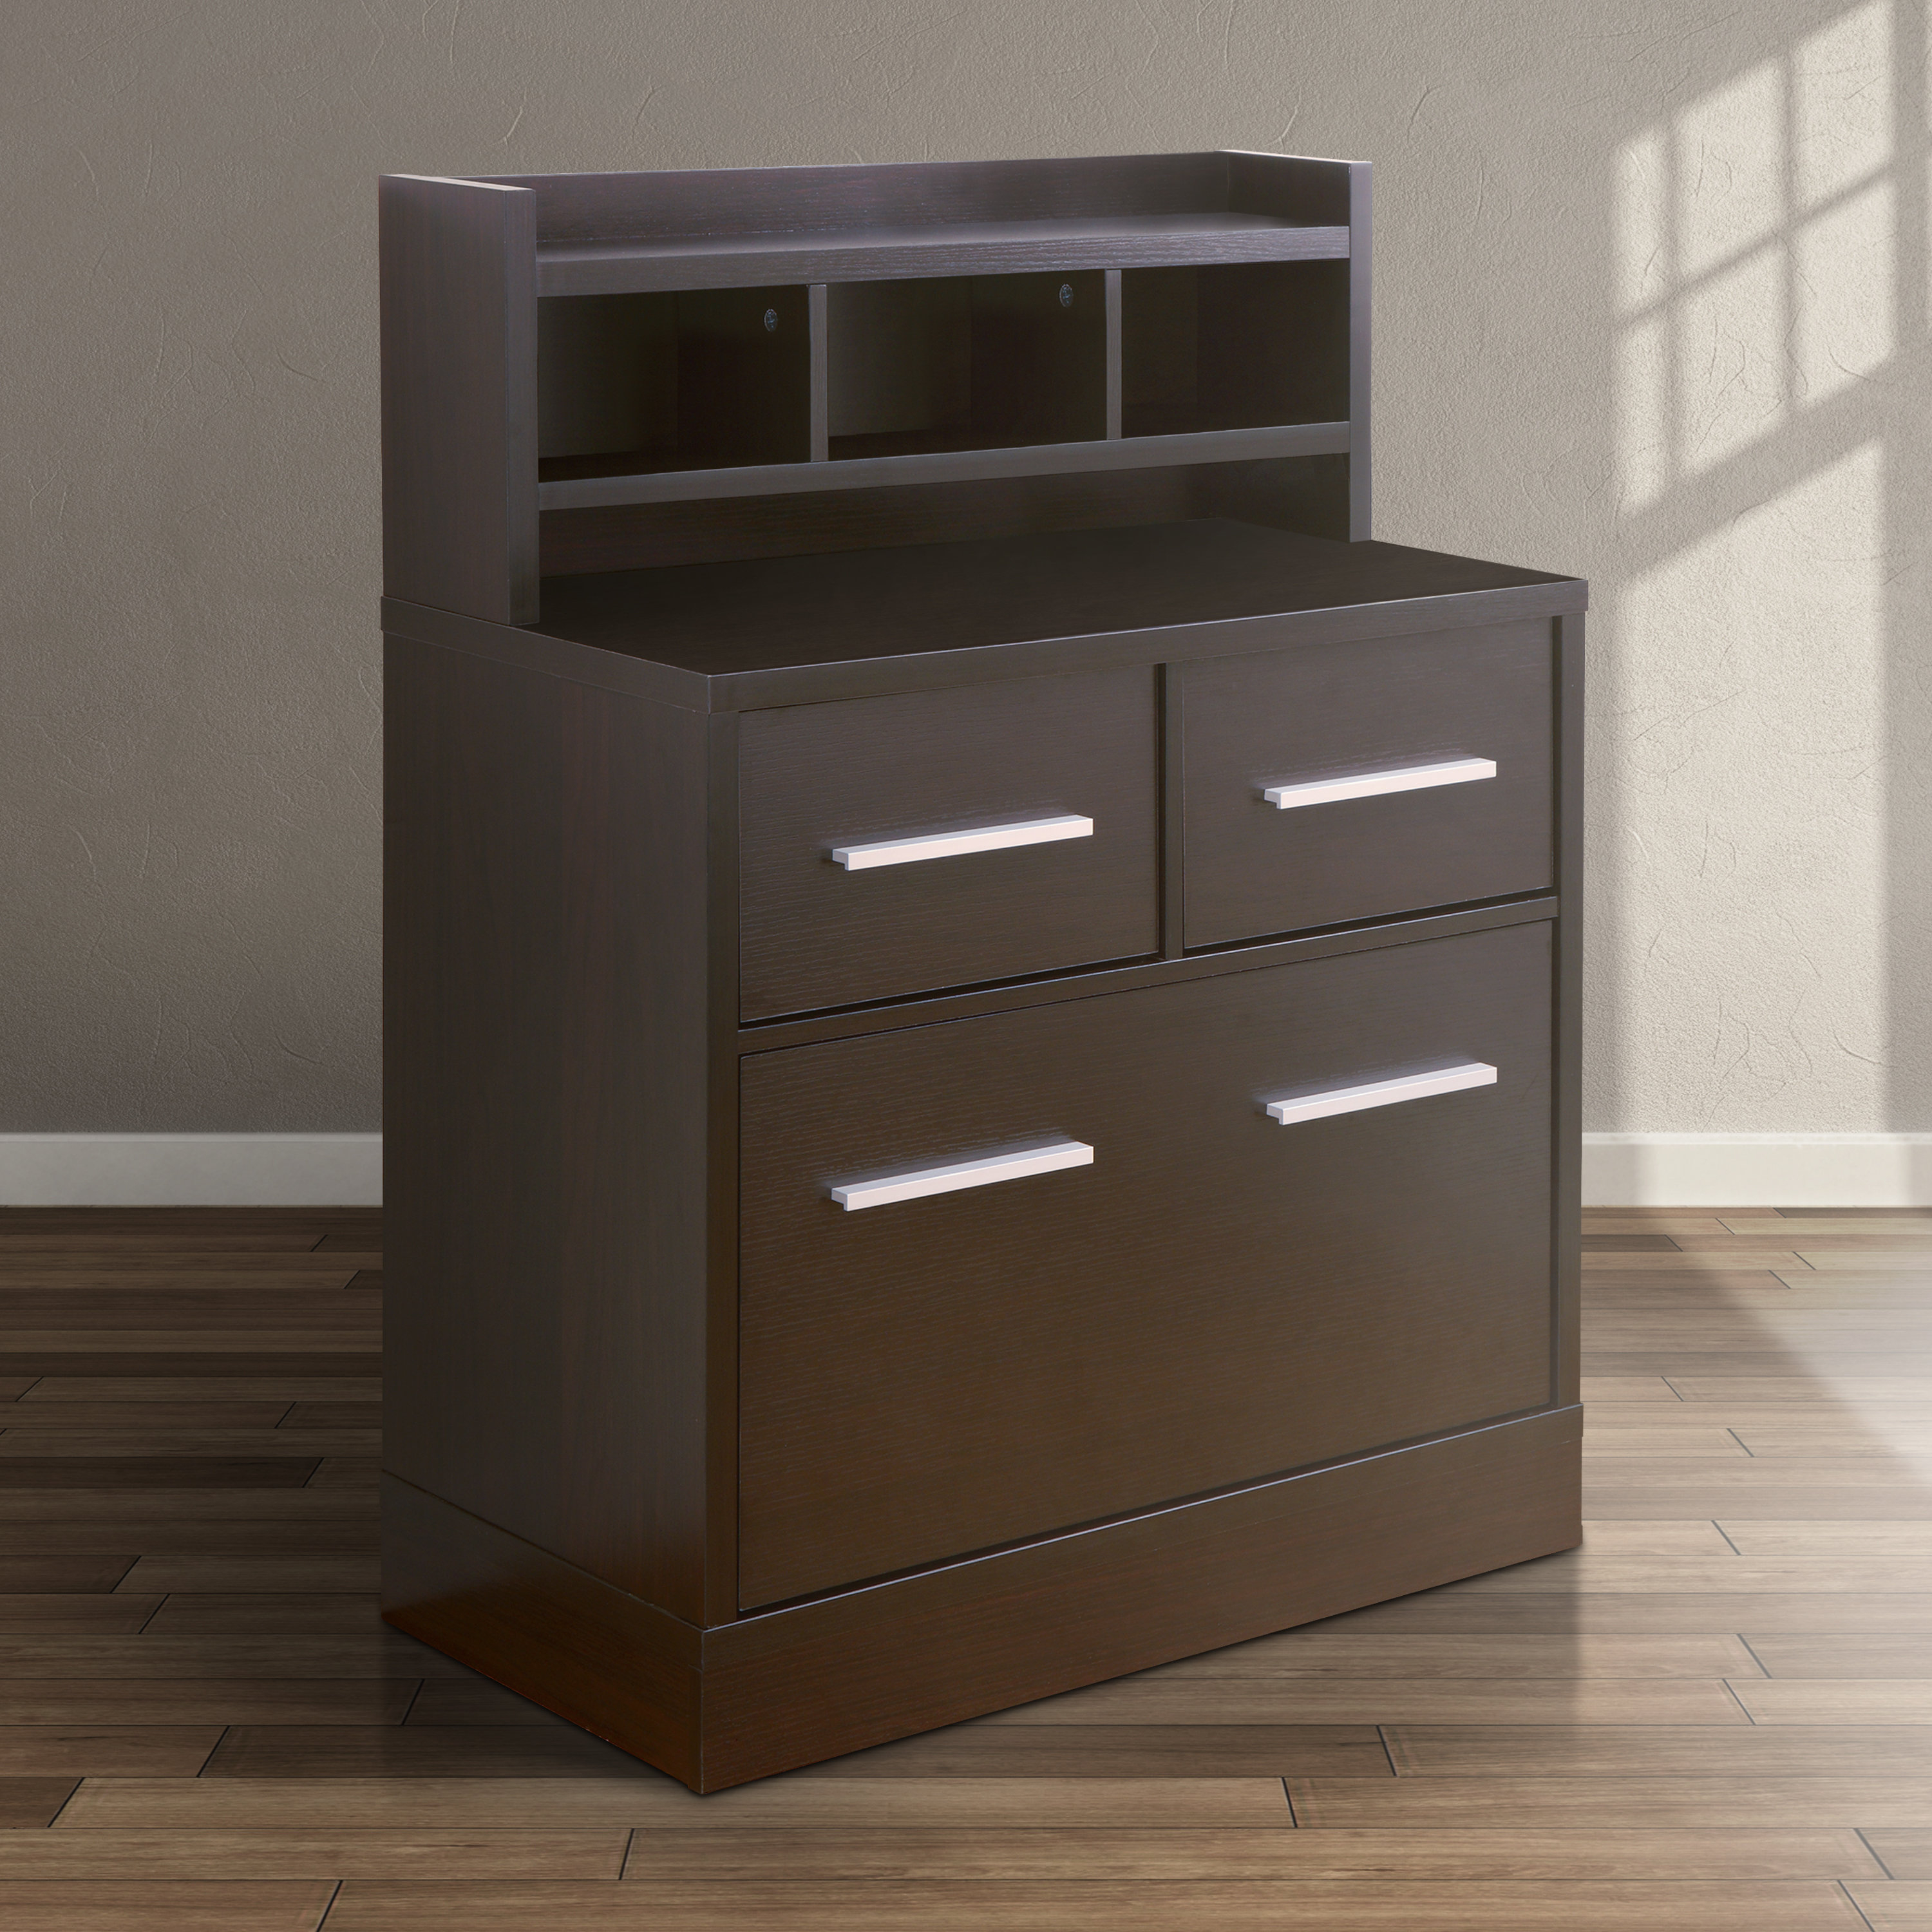 Hokku Designs 3 Drawer Lateral Filing Cabinet Reviews Wayfair throughout proportions 3000 X 3000